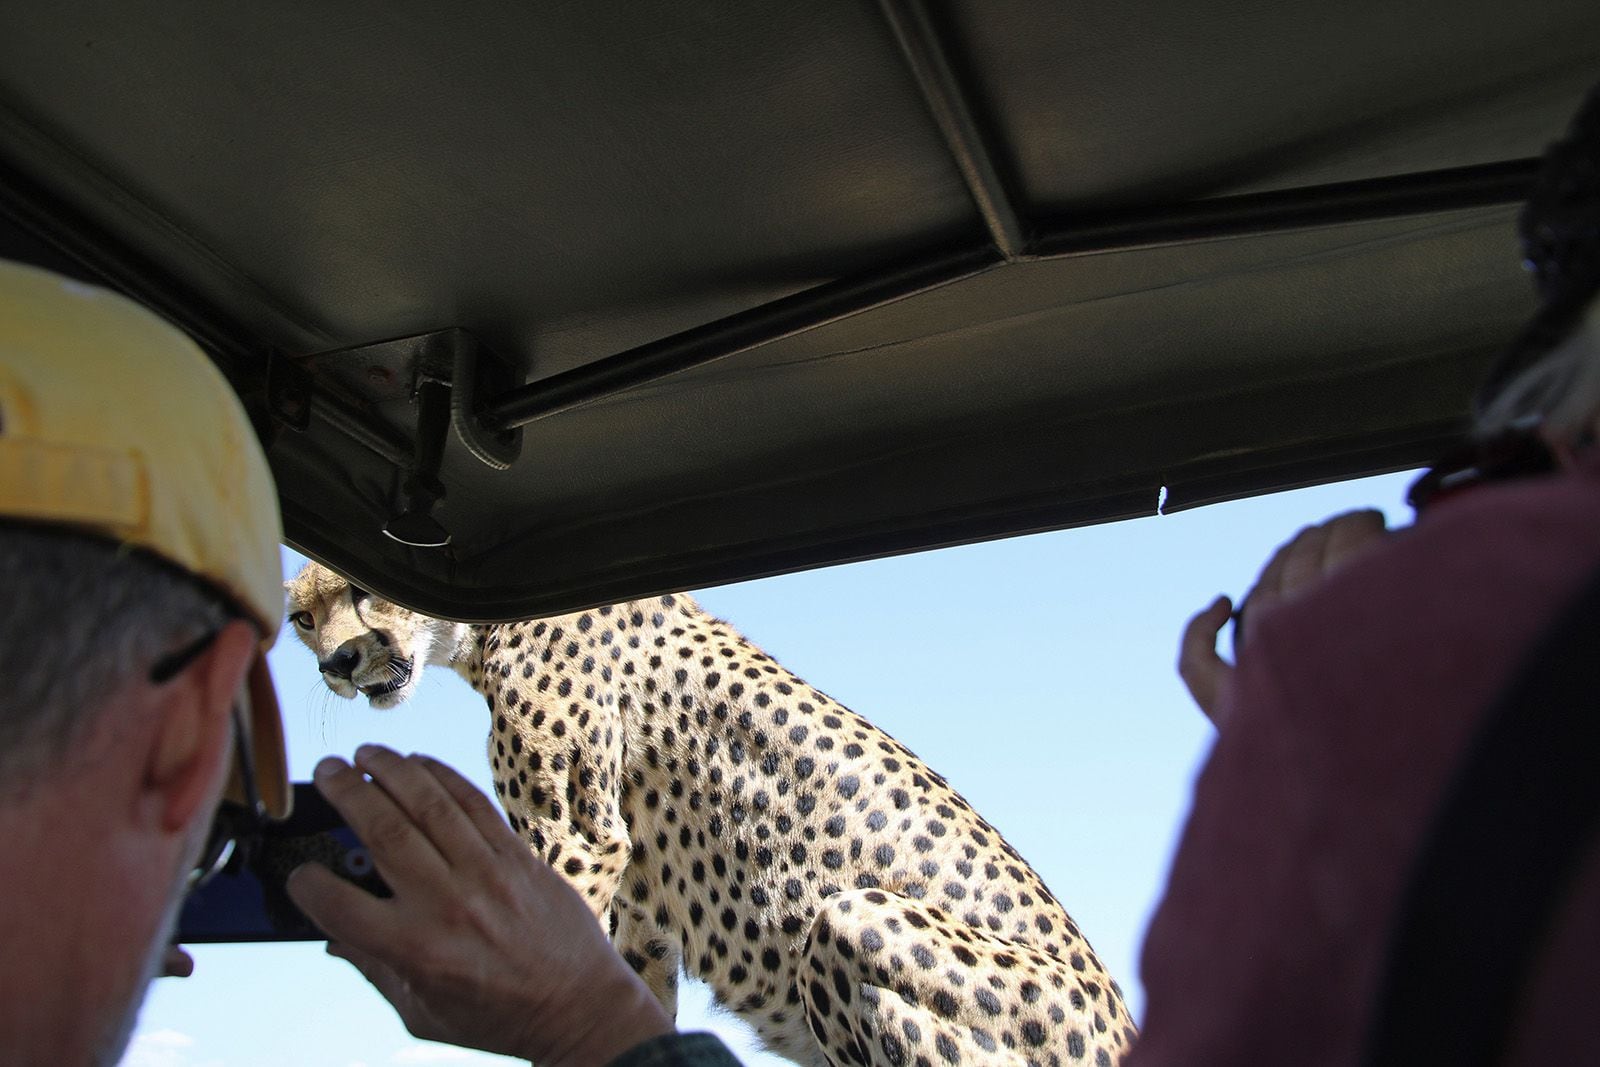 With just air between them, a cheetah eyeballs passengers after jumping onto their safari...